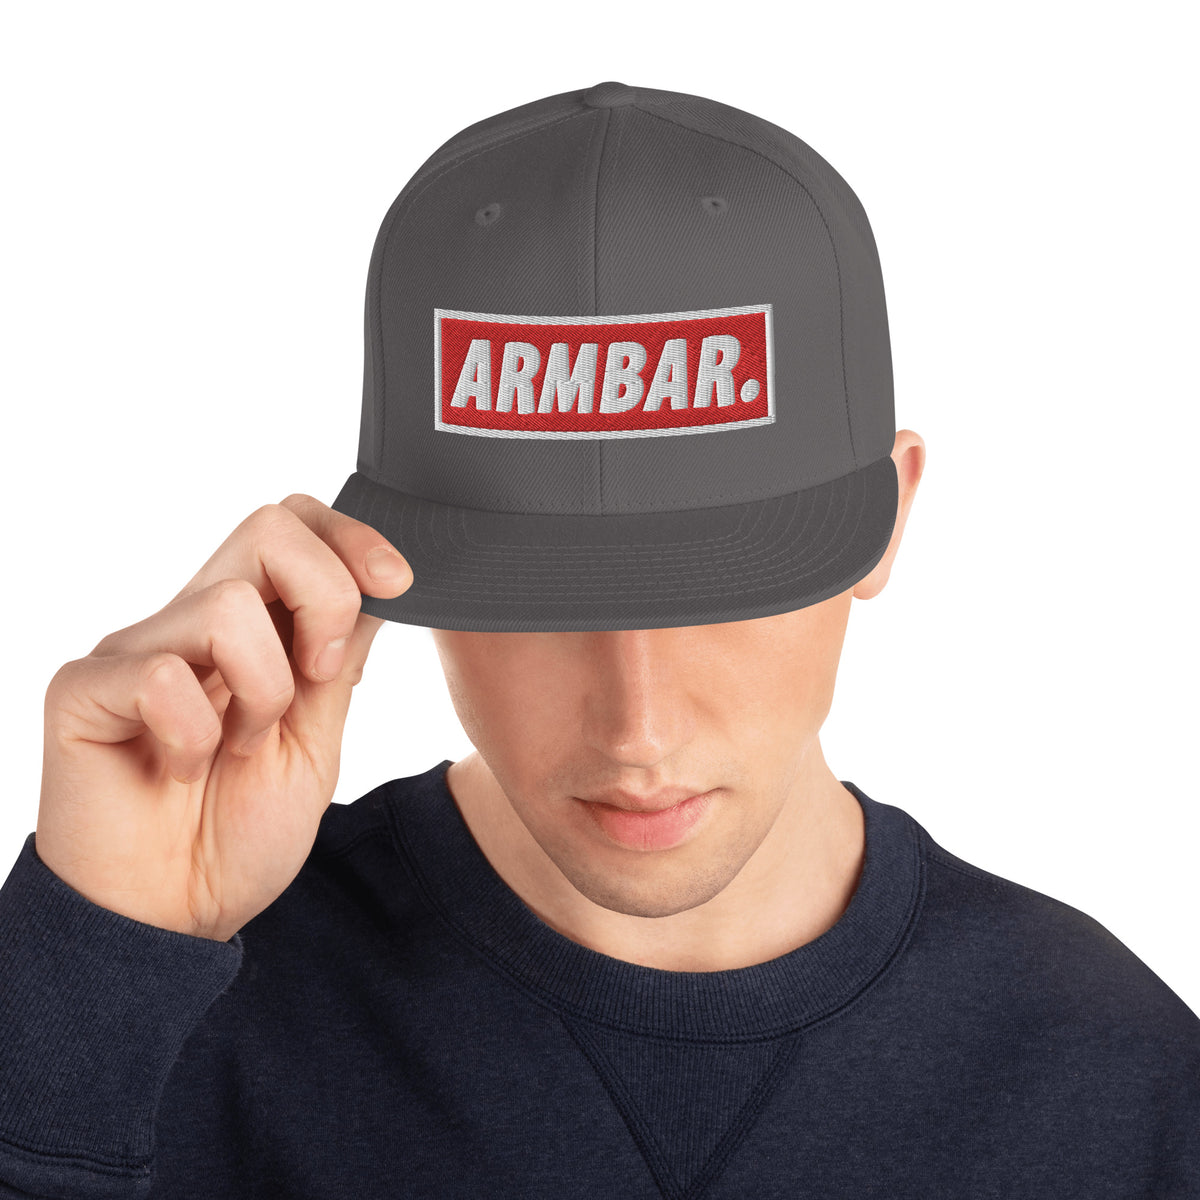 BJJ Text Armbar Red Snapback Hat